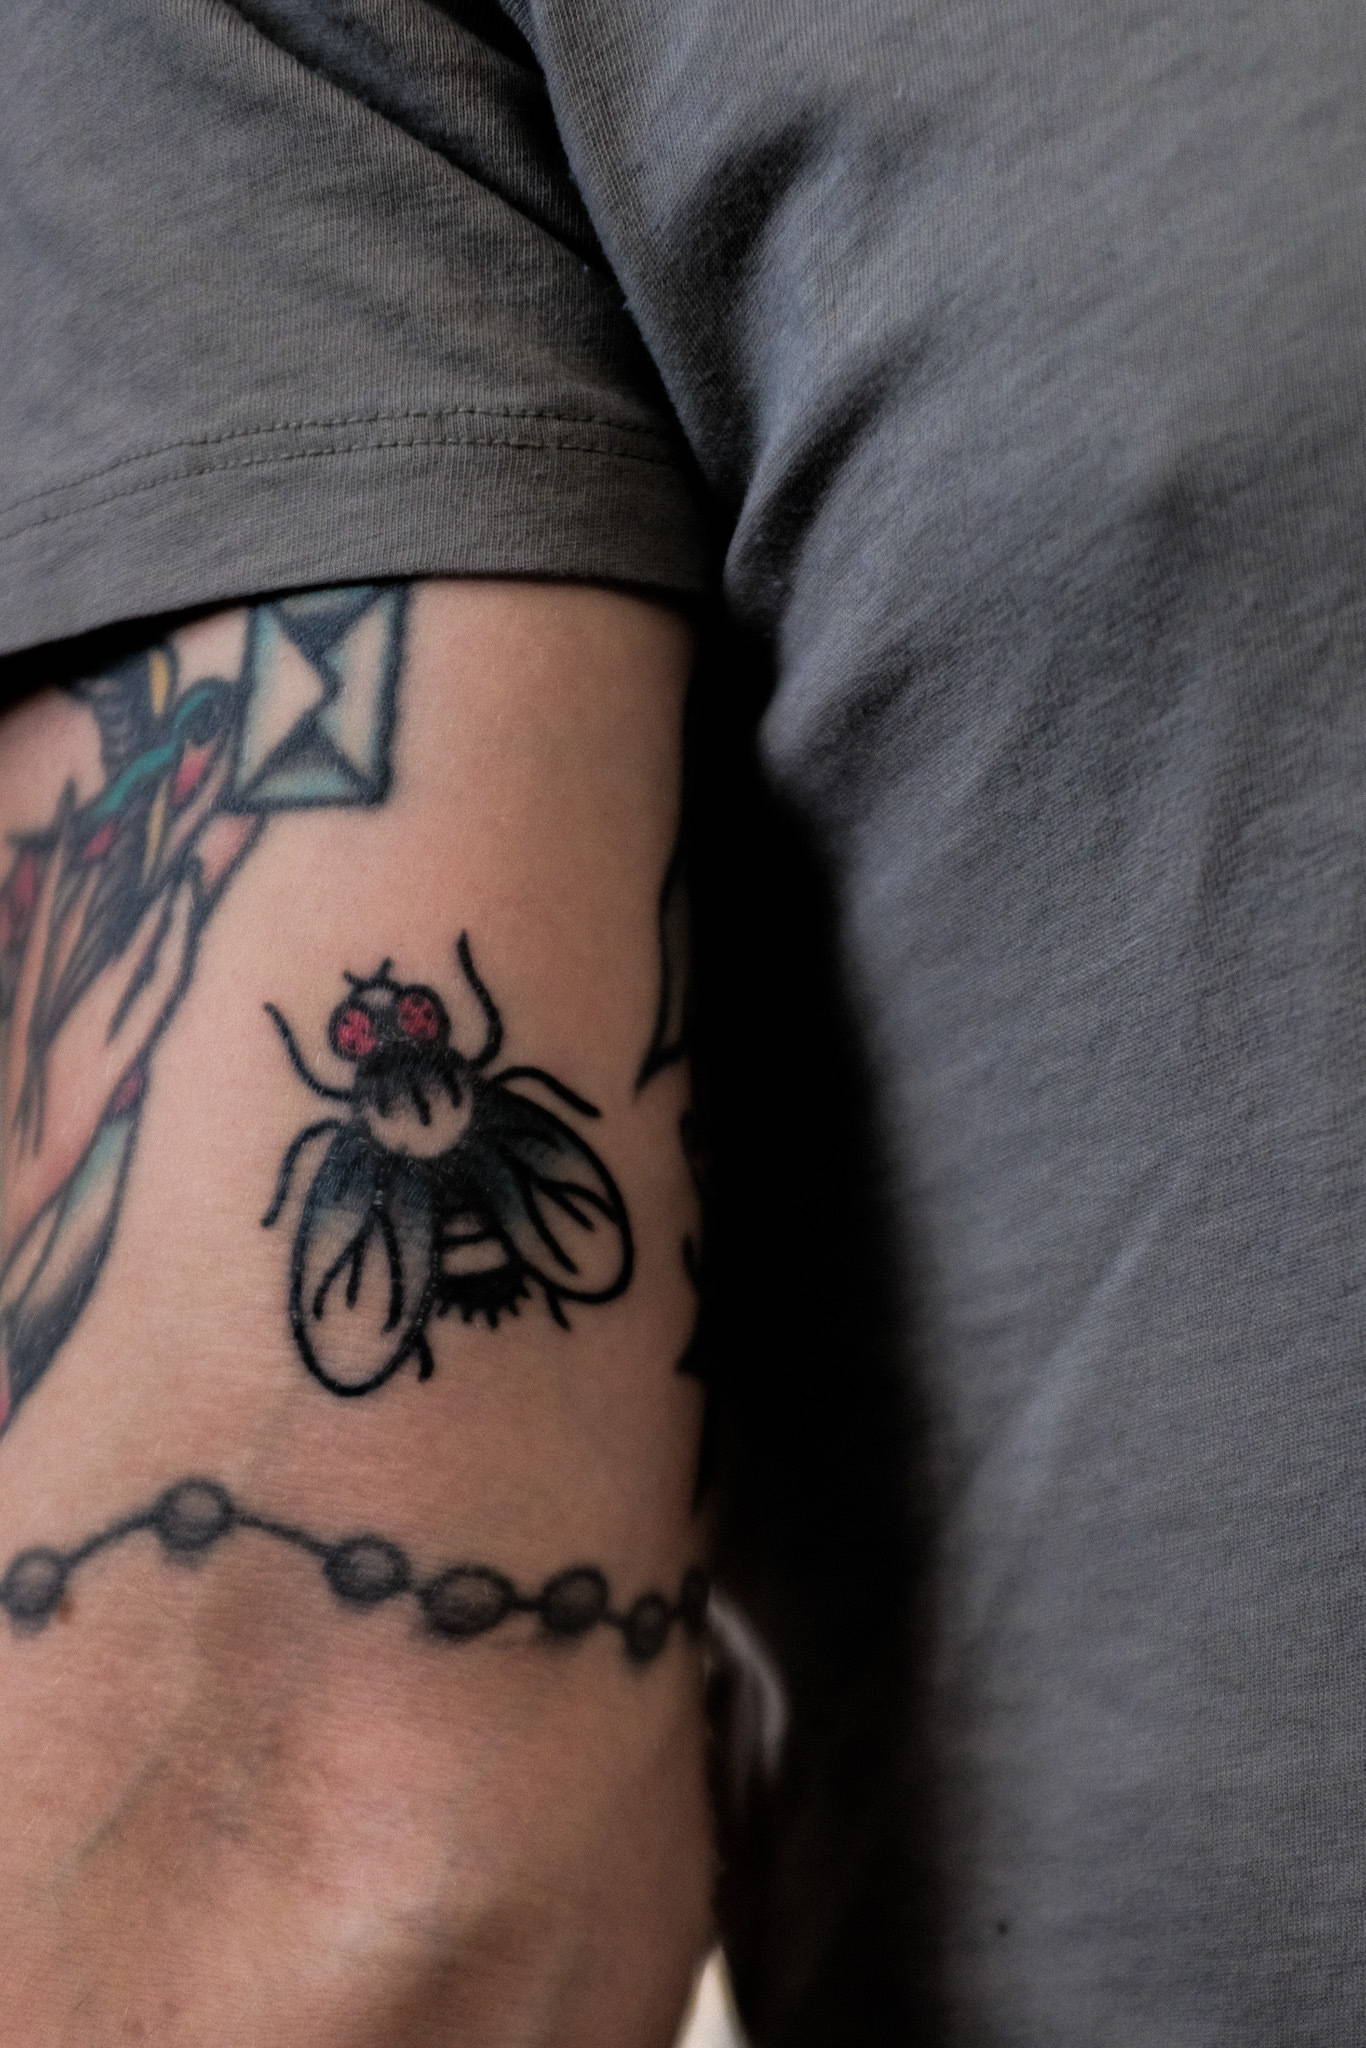 Future Fields co-founder Matt Anderson-Baron Drosophila fly tattoo